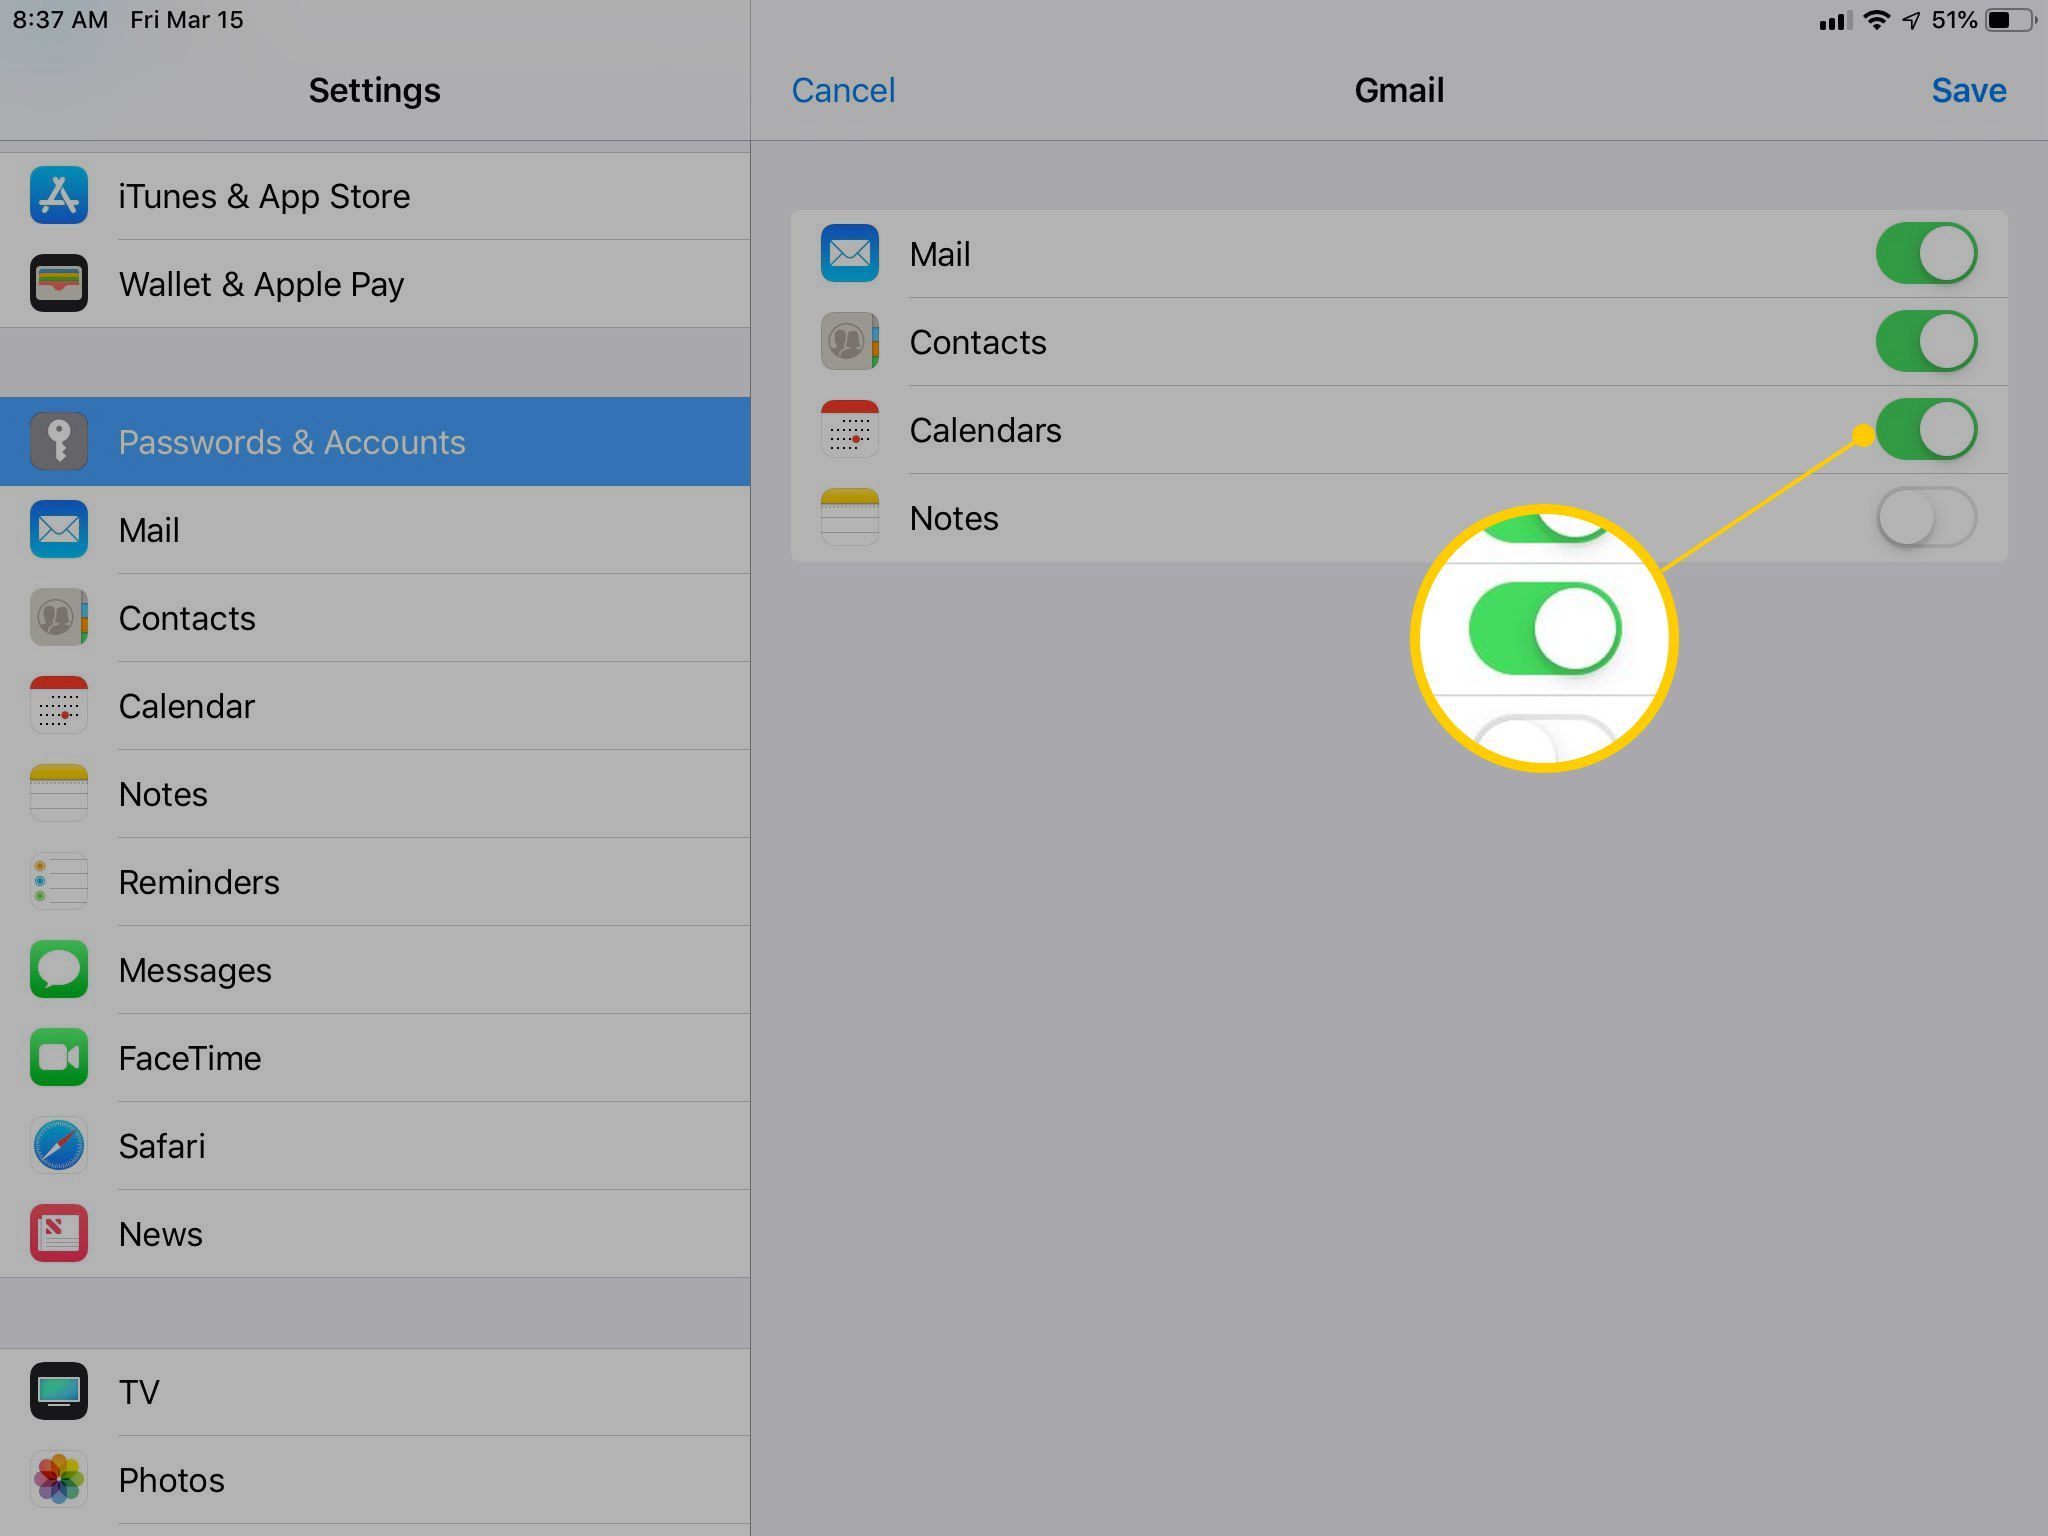 Опция Календари в настройках Gmail на iPad позволяет включить